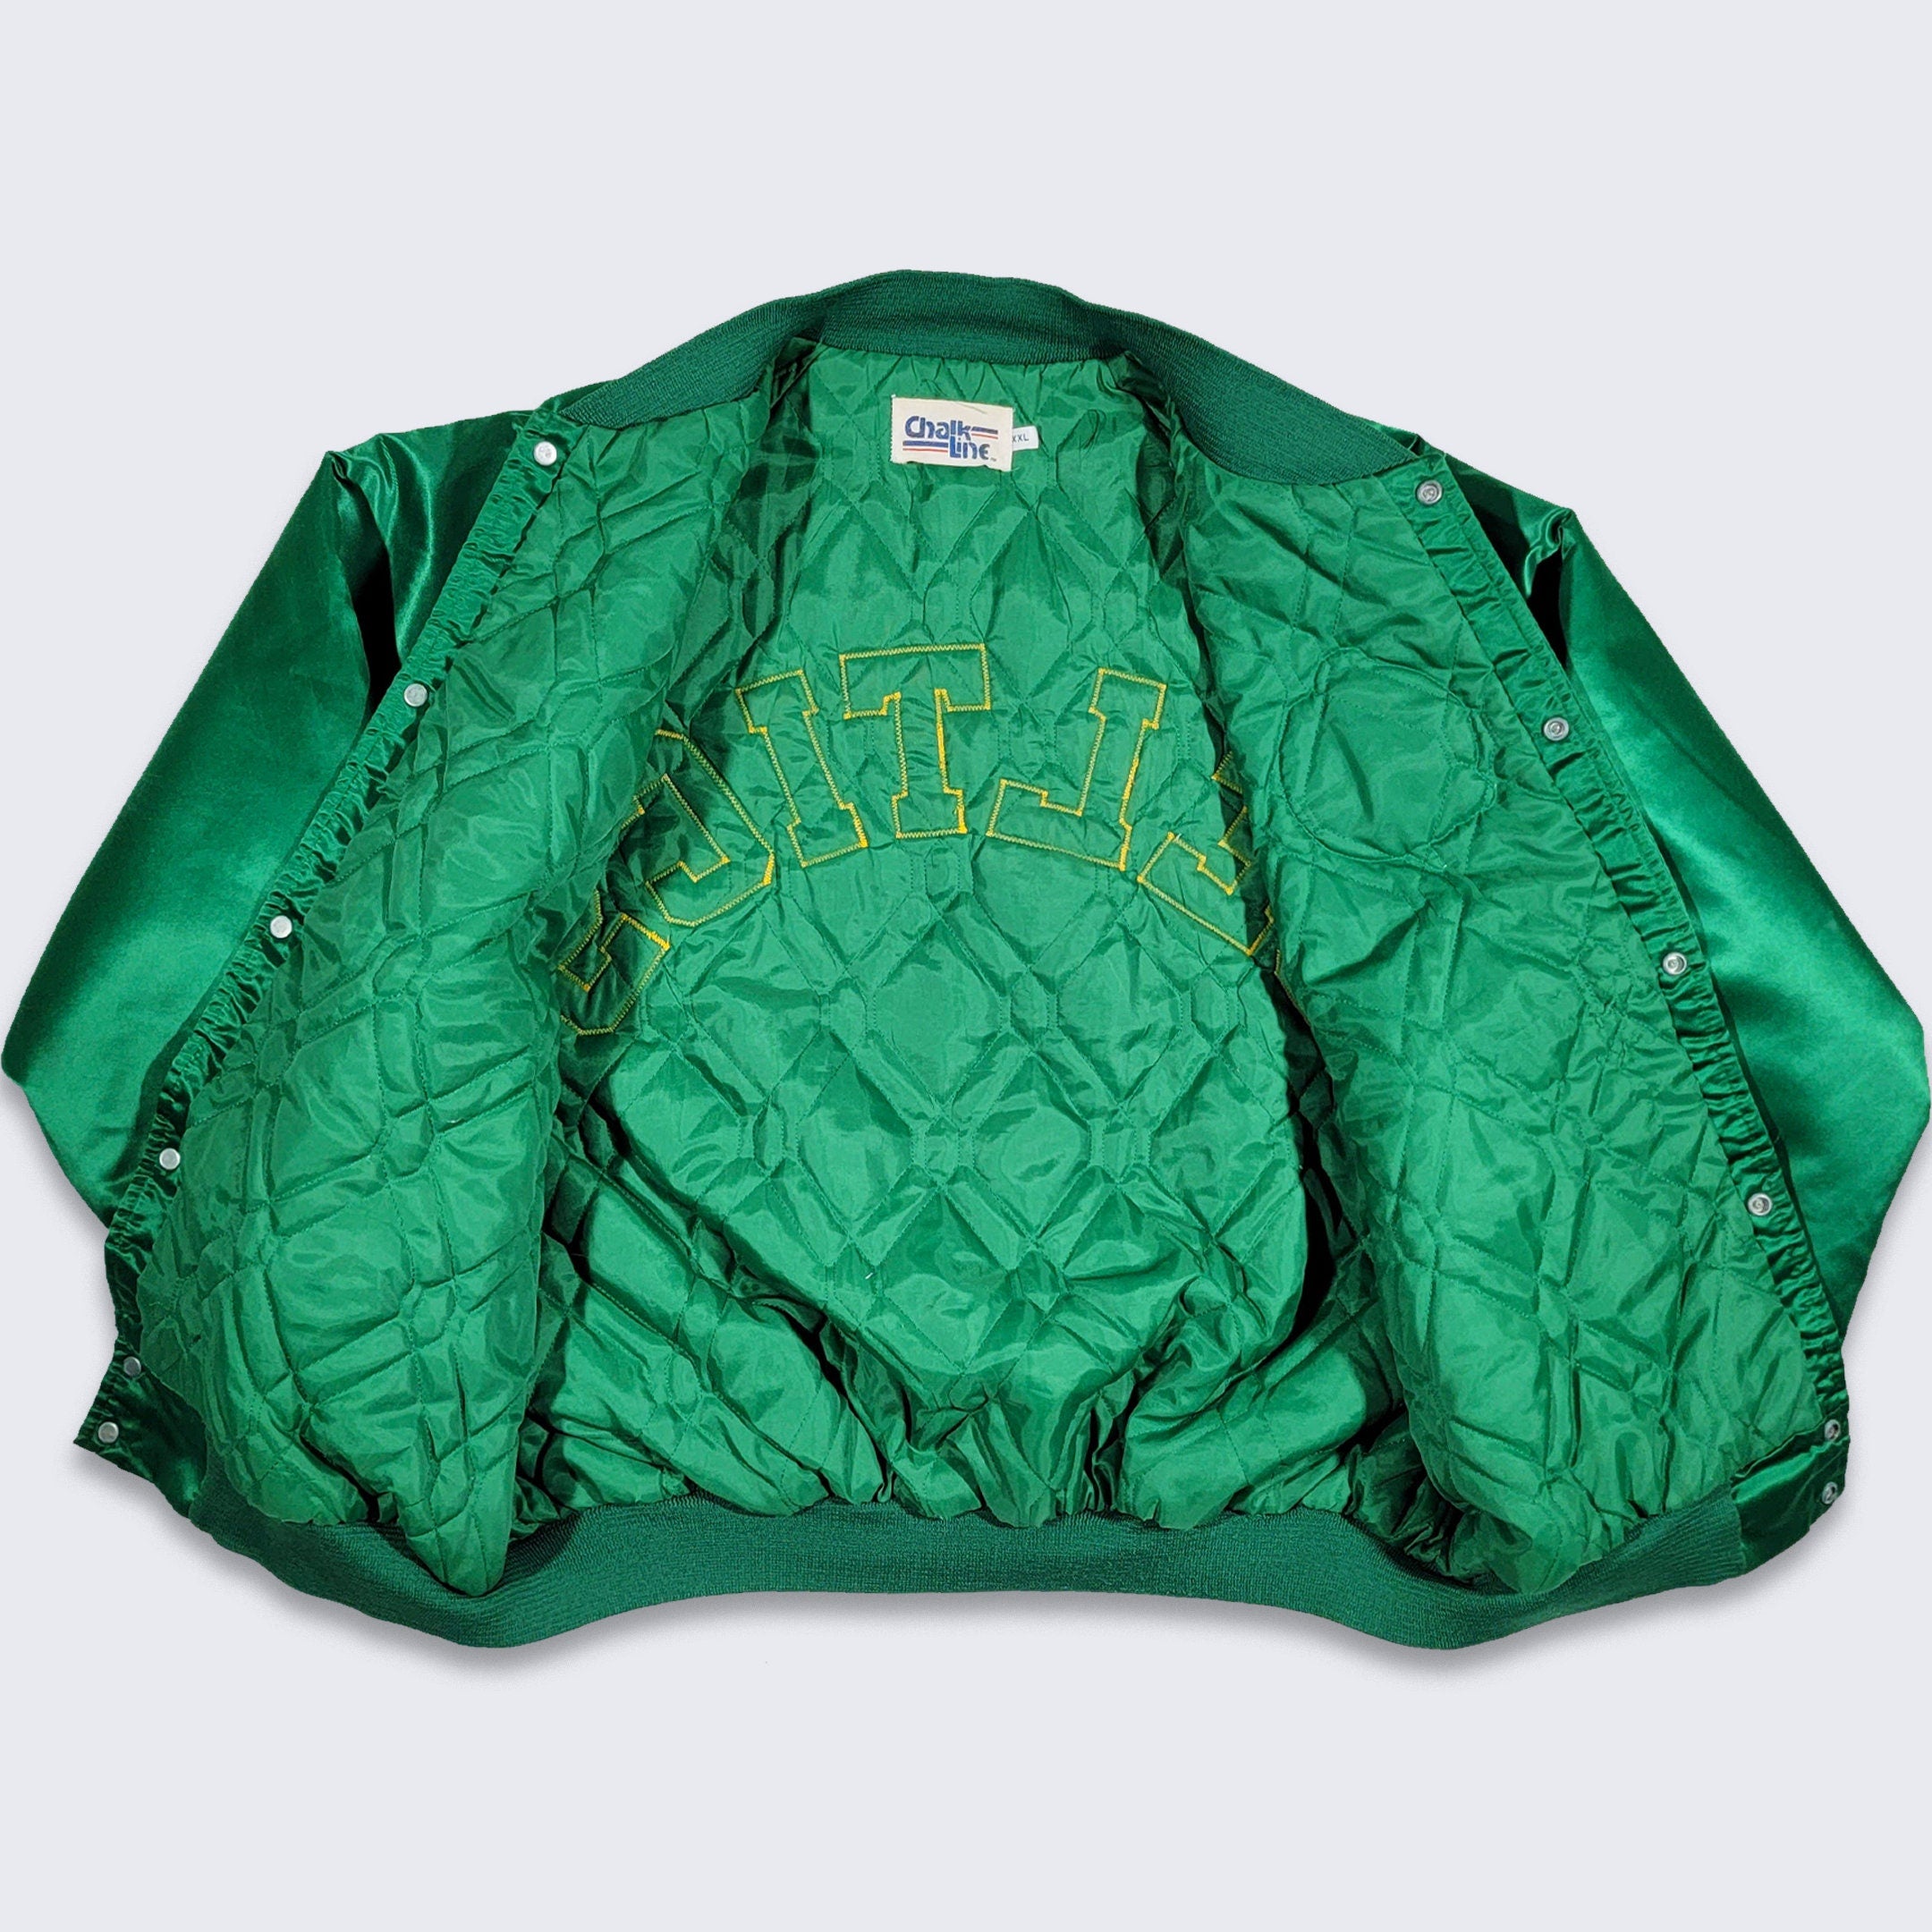 Boston Celtics Vintage 90s Starter Windbreaker Jacket - NBA Basketball  Green & Black Coat - Very Rare - Size Men's Medium -Free SHIPPING